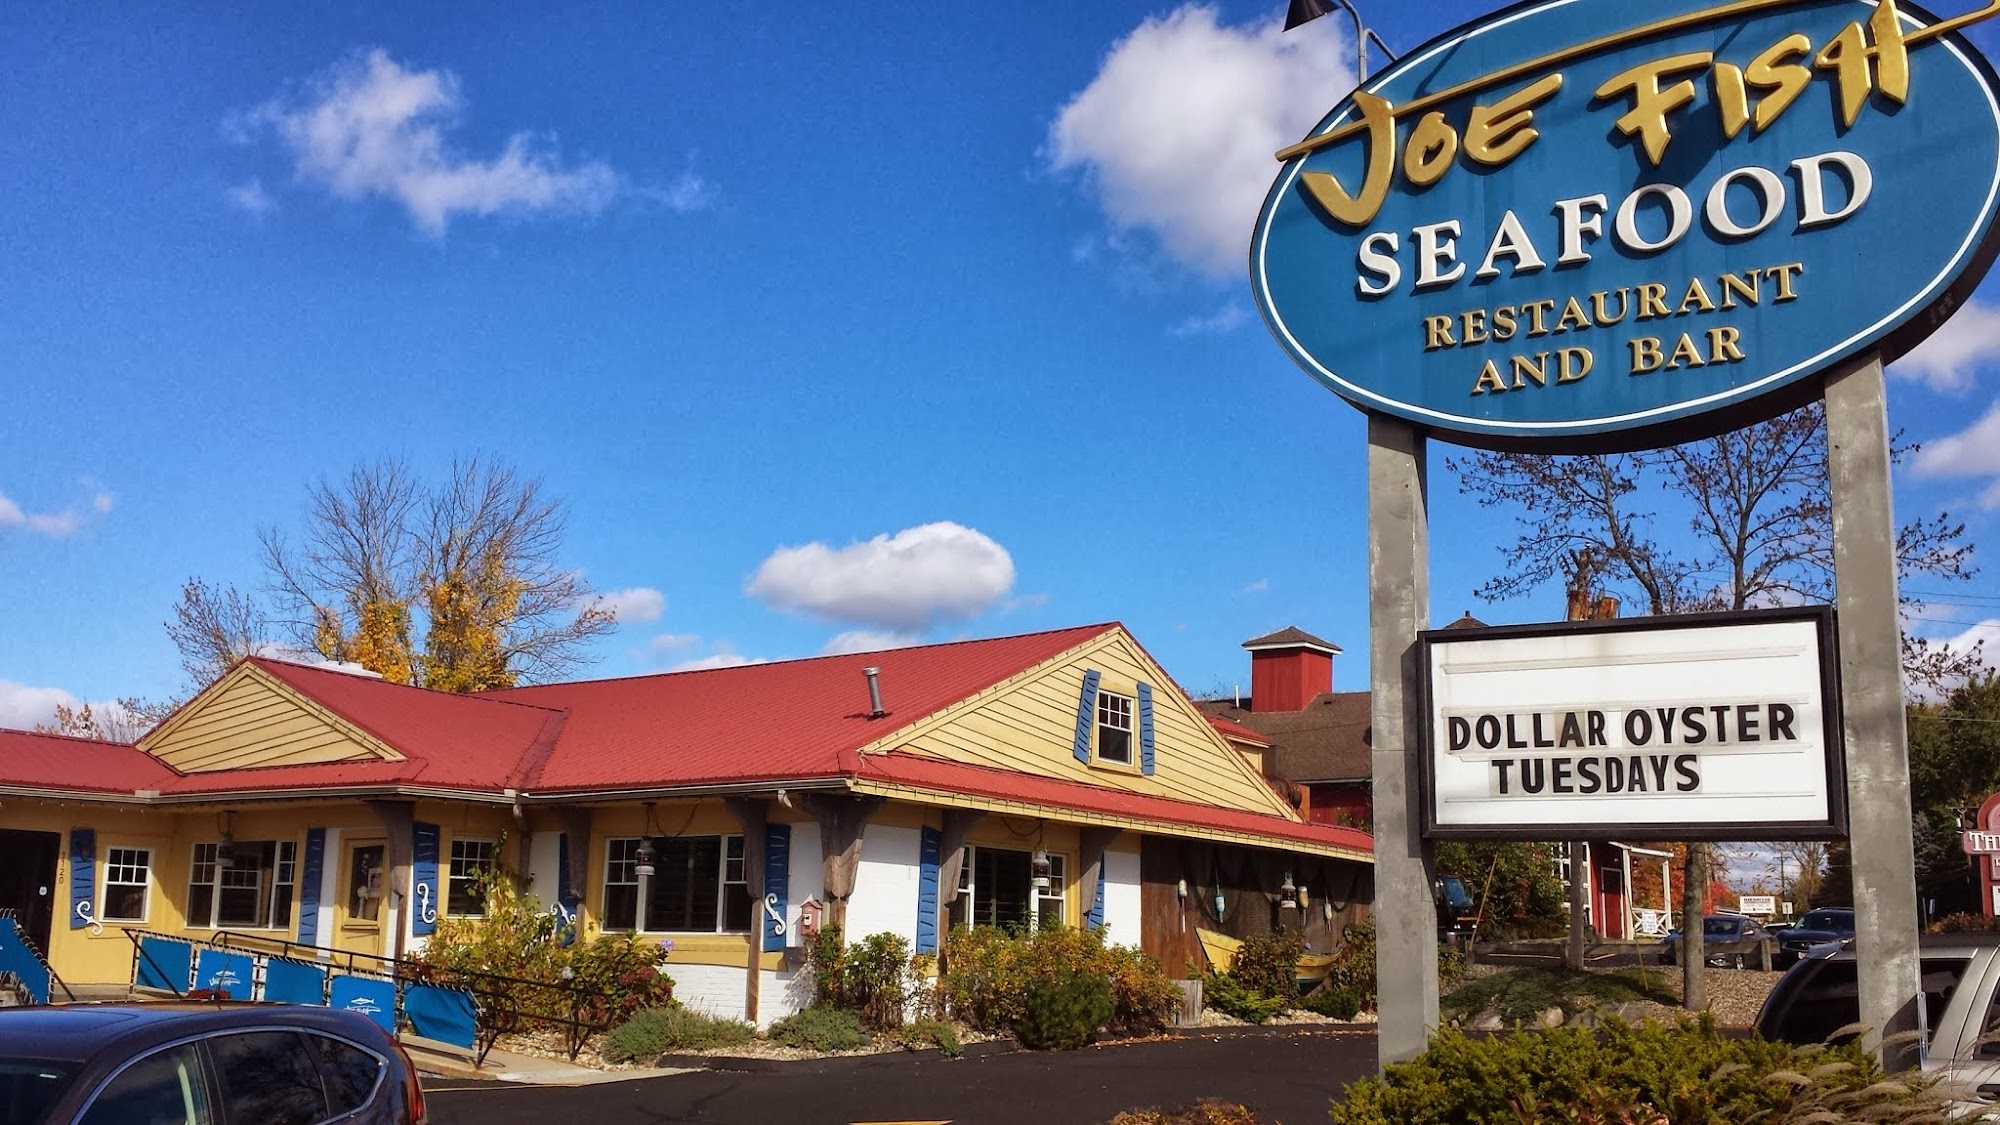 Joe Fish Seafood Restaurant